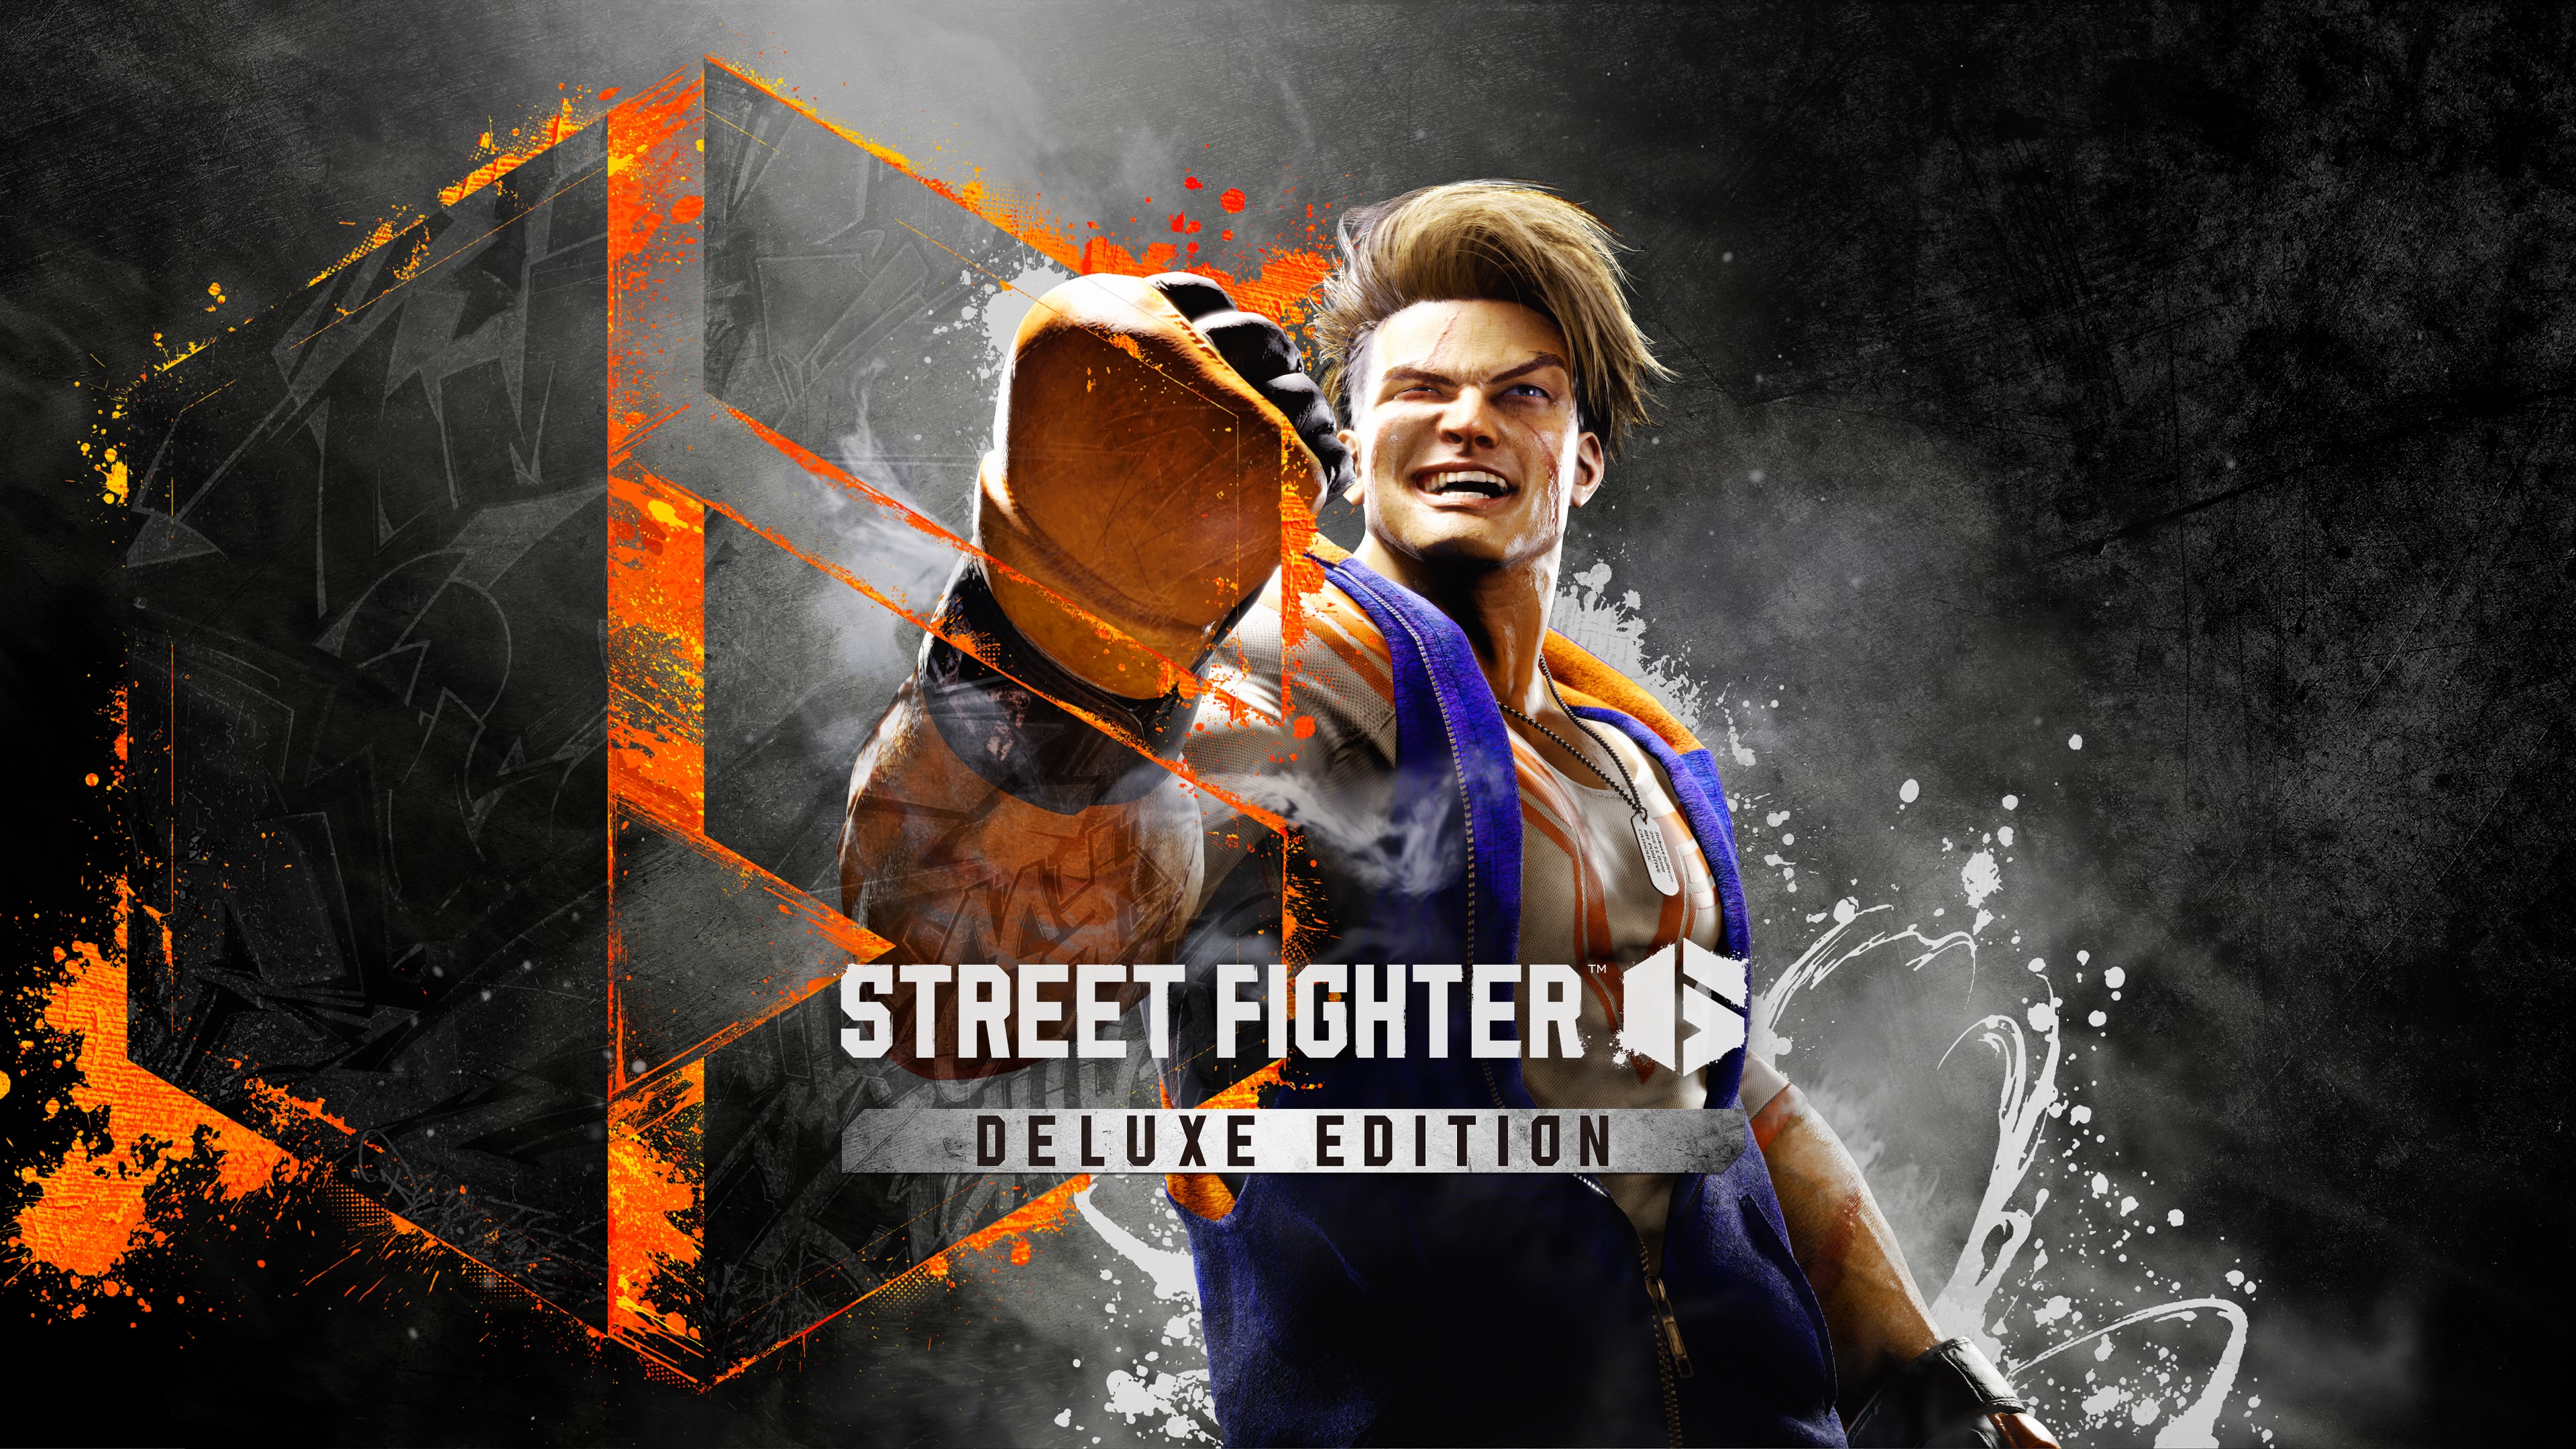 Street Fighter 6 Deluxe Edition (중국어(간체자), 한국어, 영어, 일본어, 중국어(번체자))